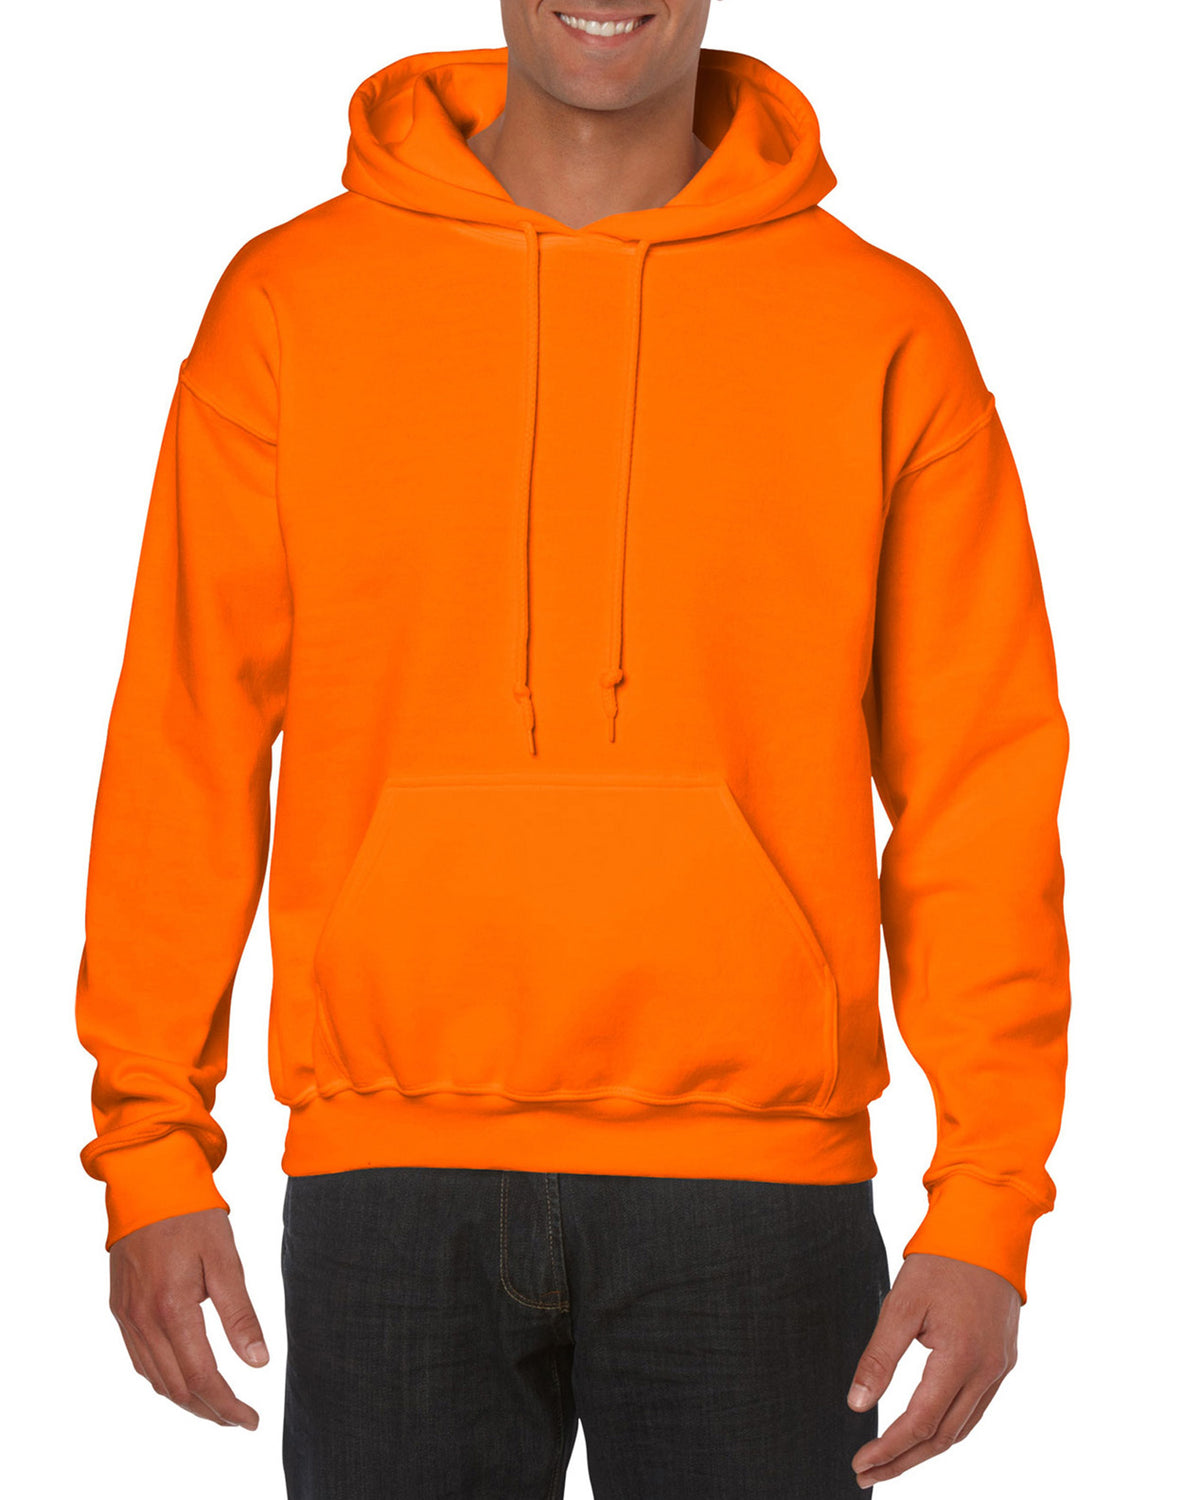  Heavy Blend Adult Hooded Sweatshirt